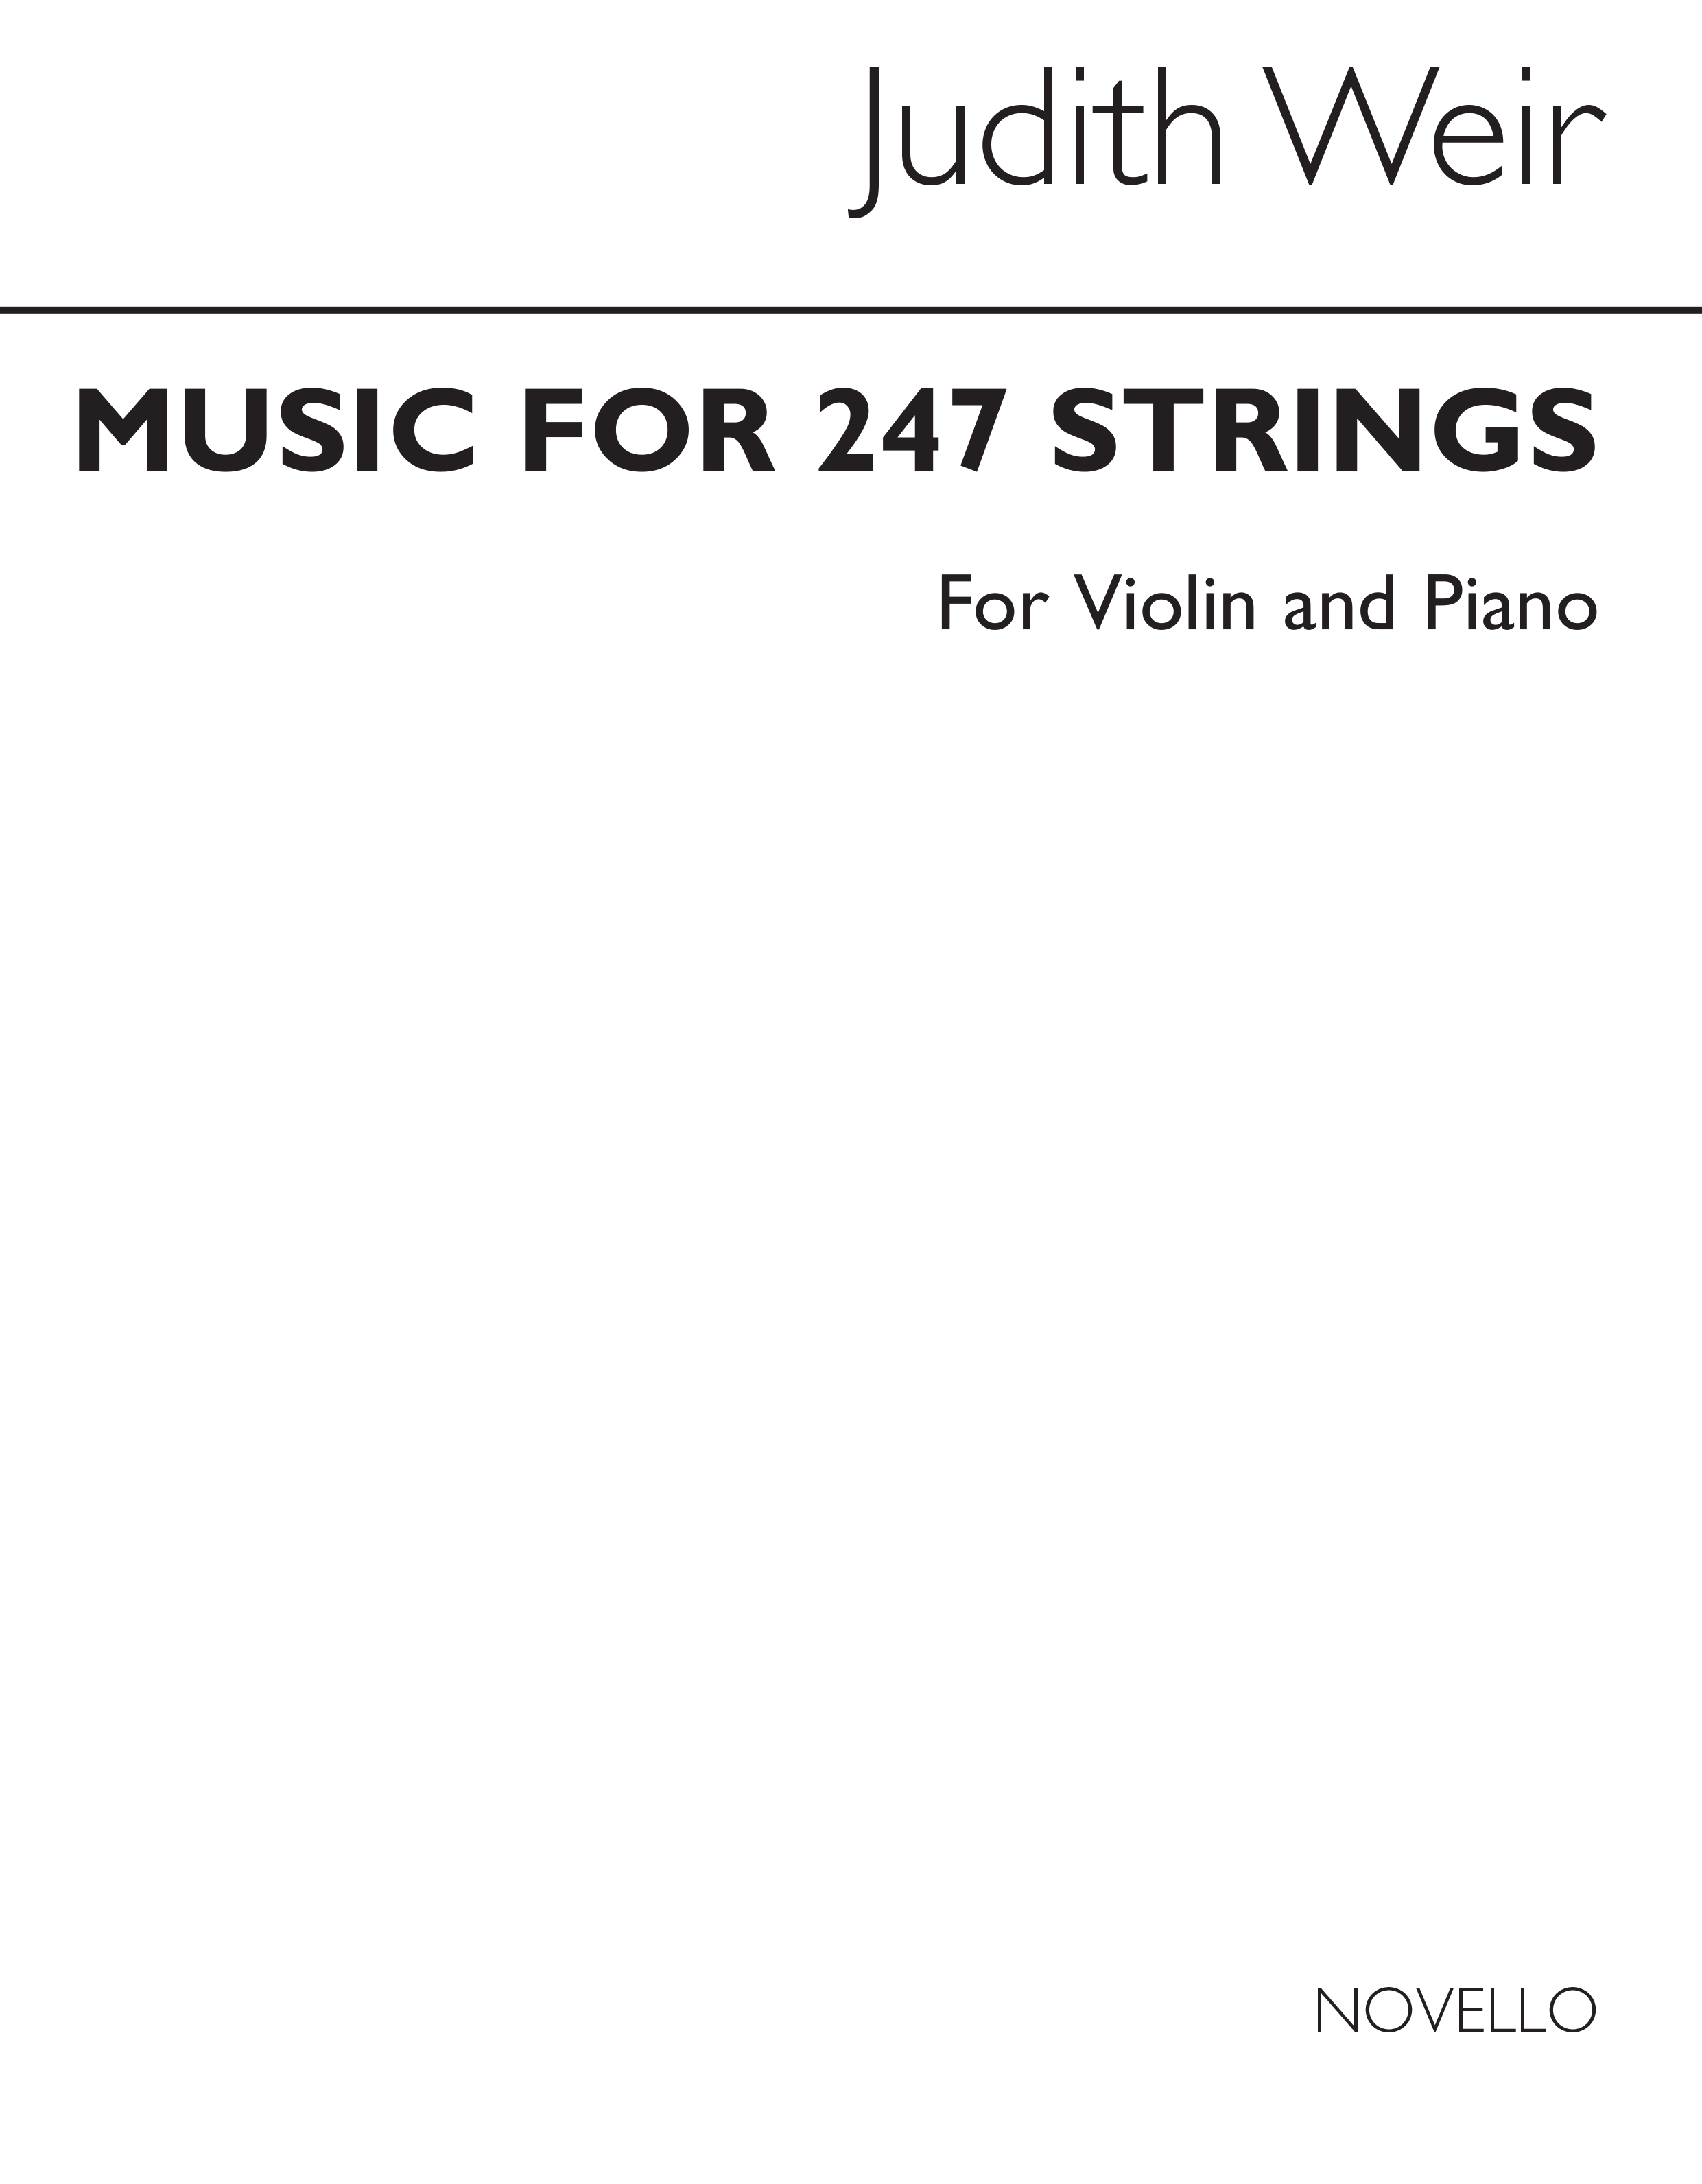 Judith Weir: Music For 247 Strings